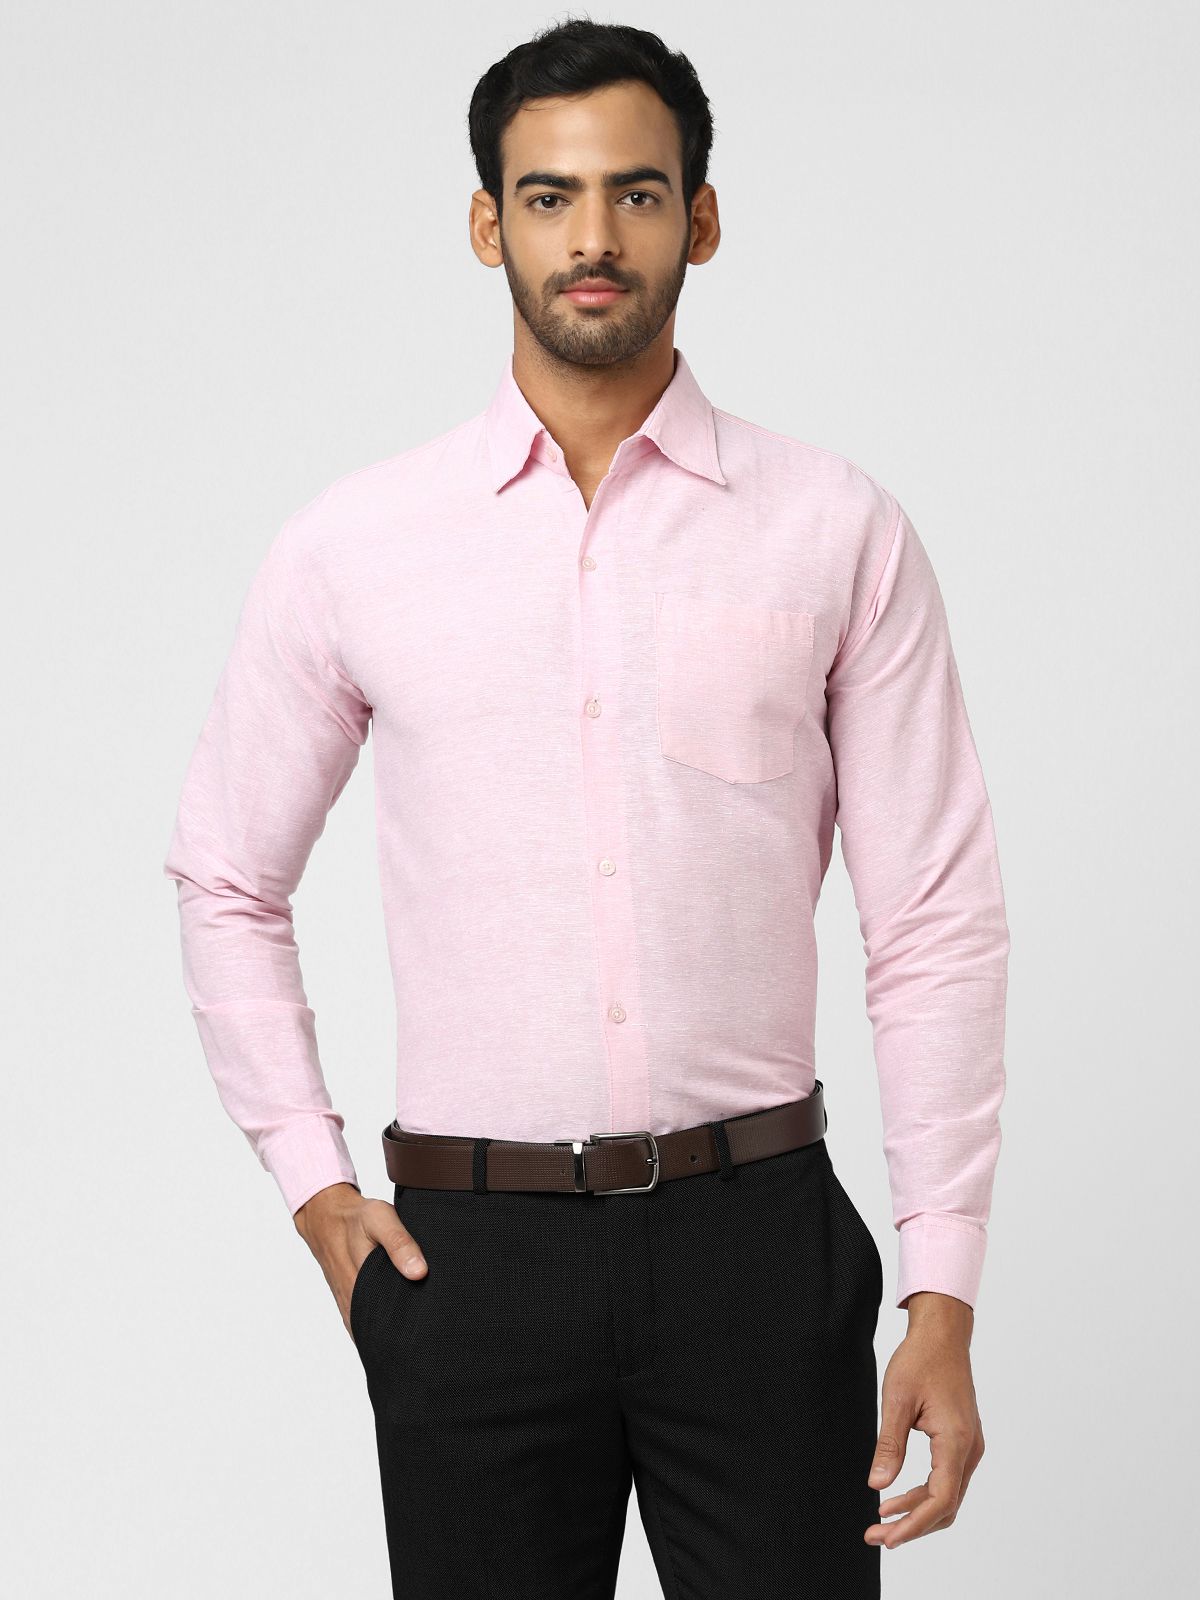     			DESHBANDHU DBK - Pink Cotton Blend Regular Fit Men's Casual Shirt ( Pack of 1 )